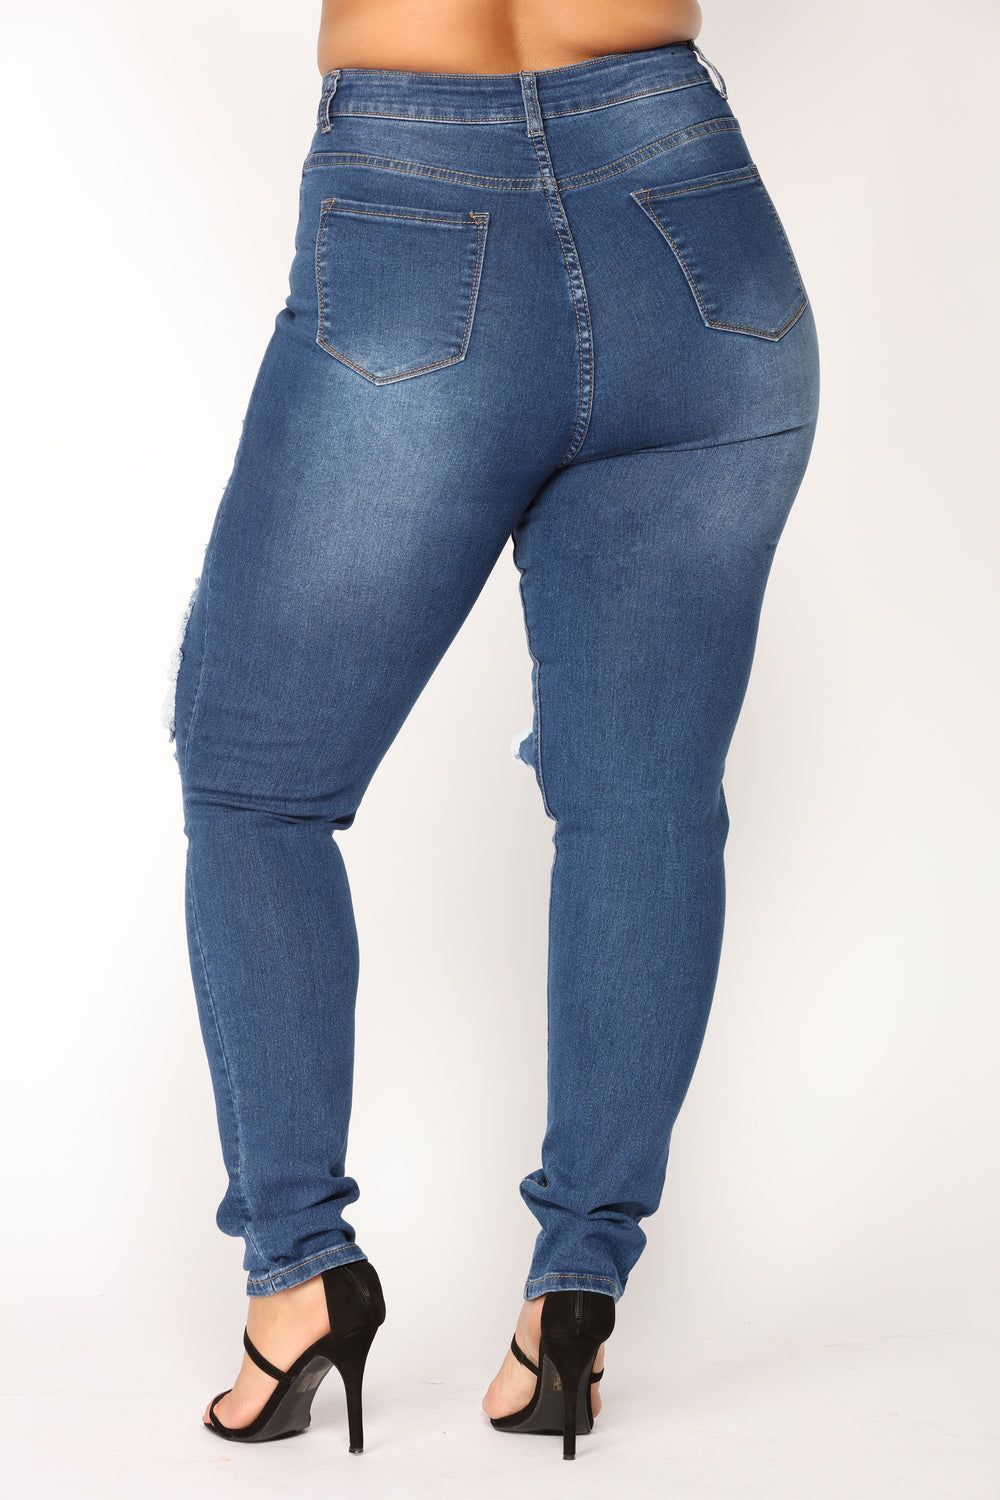 San Antonio Distressed Jeans - Medium Blue